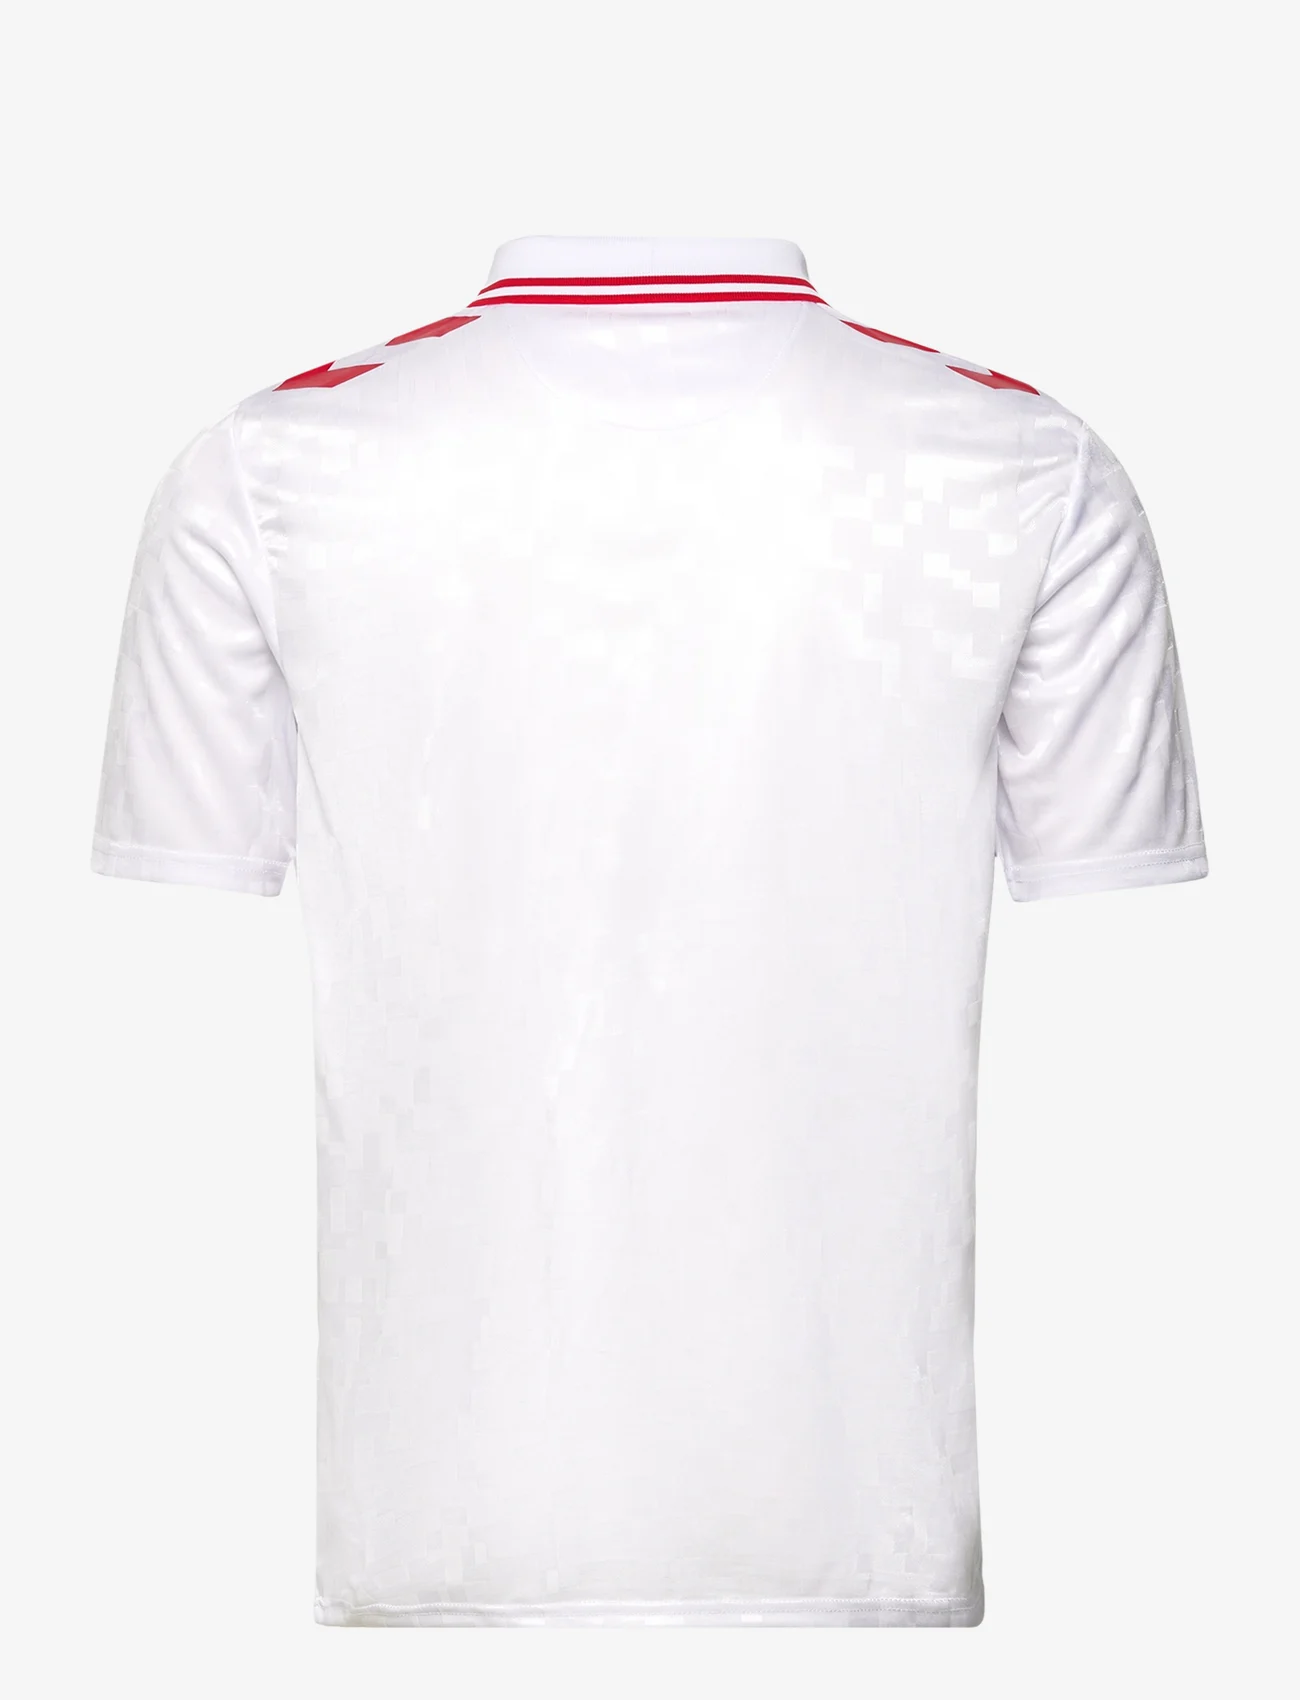 Hummel - DBU 24 AWAY JERSEY S/S - football shirts - white - 1